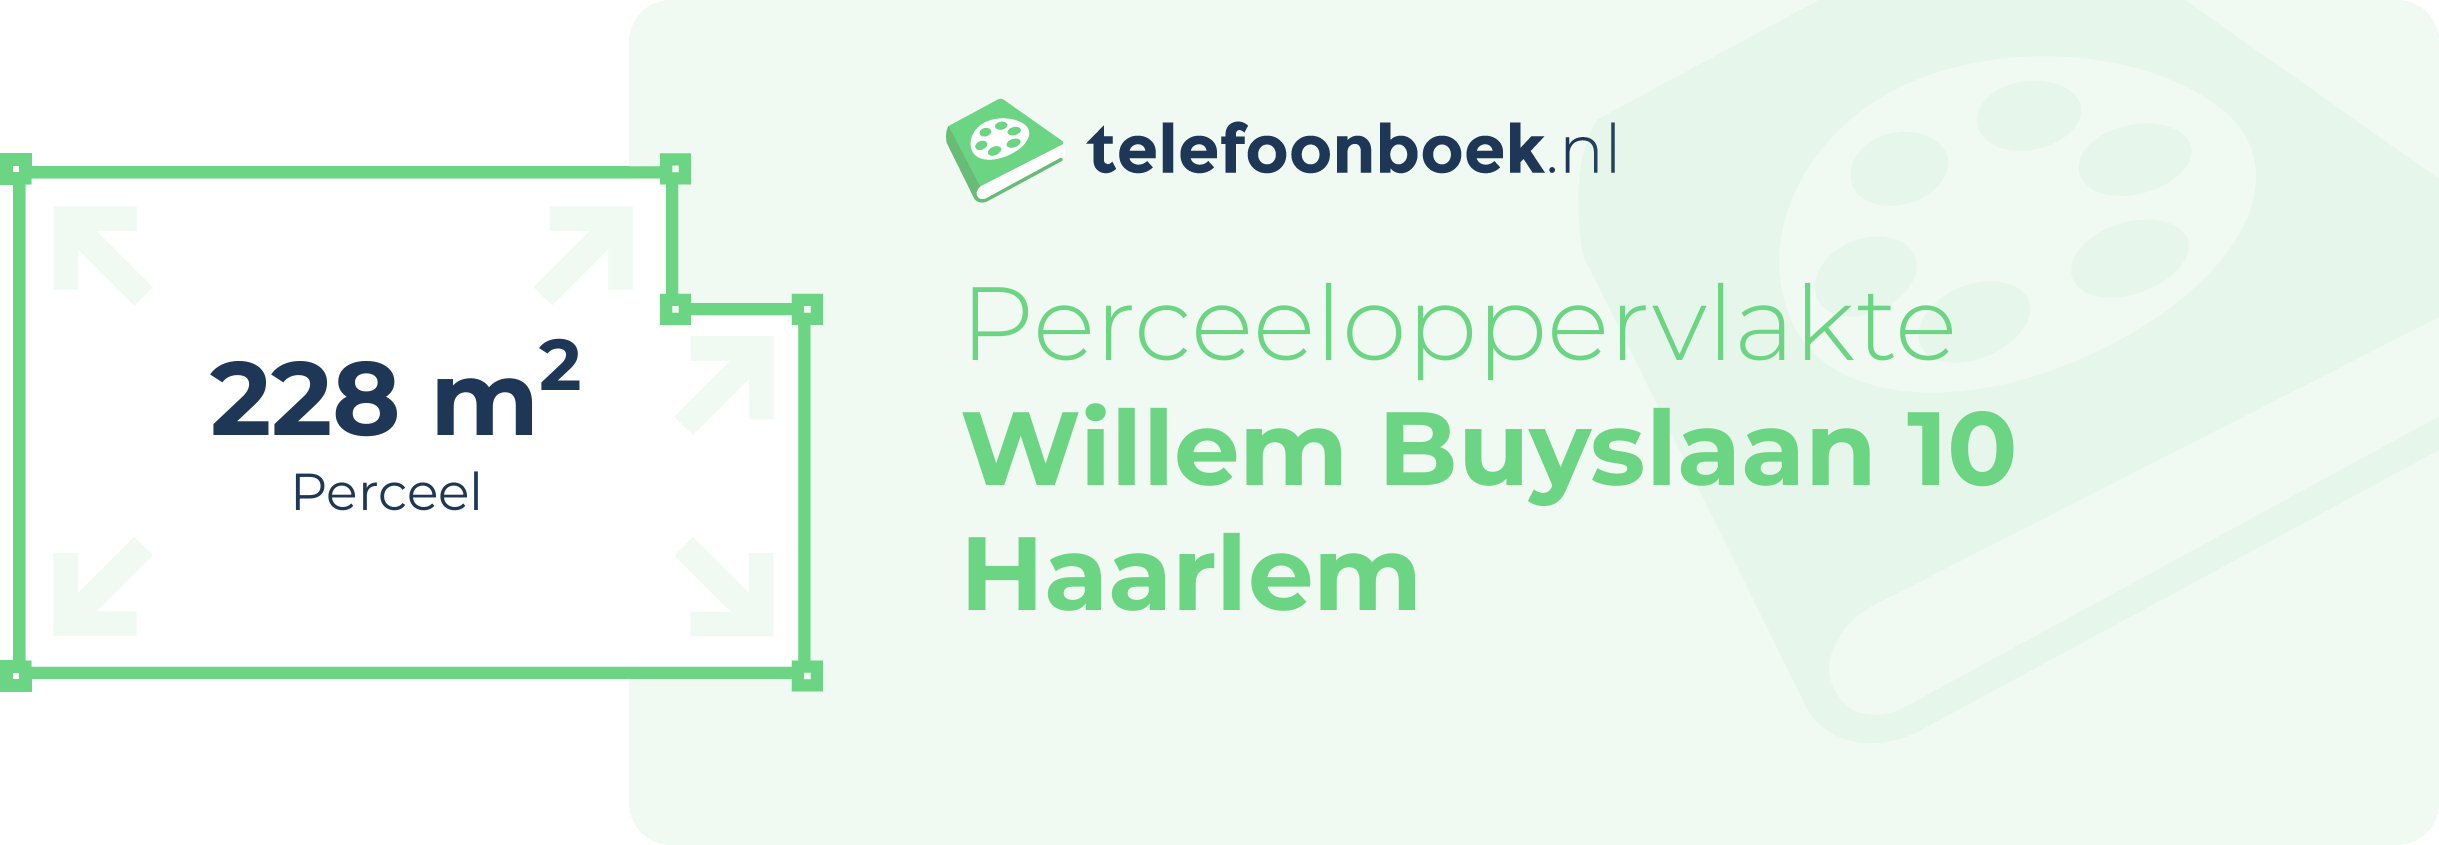 Perceeloppervlakte Willem Buyslaan 10 Haarlem